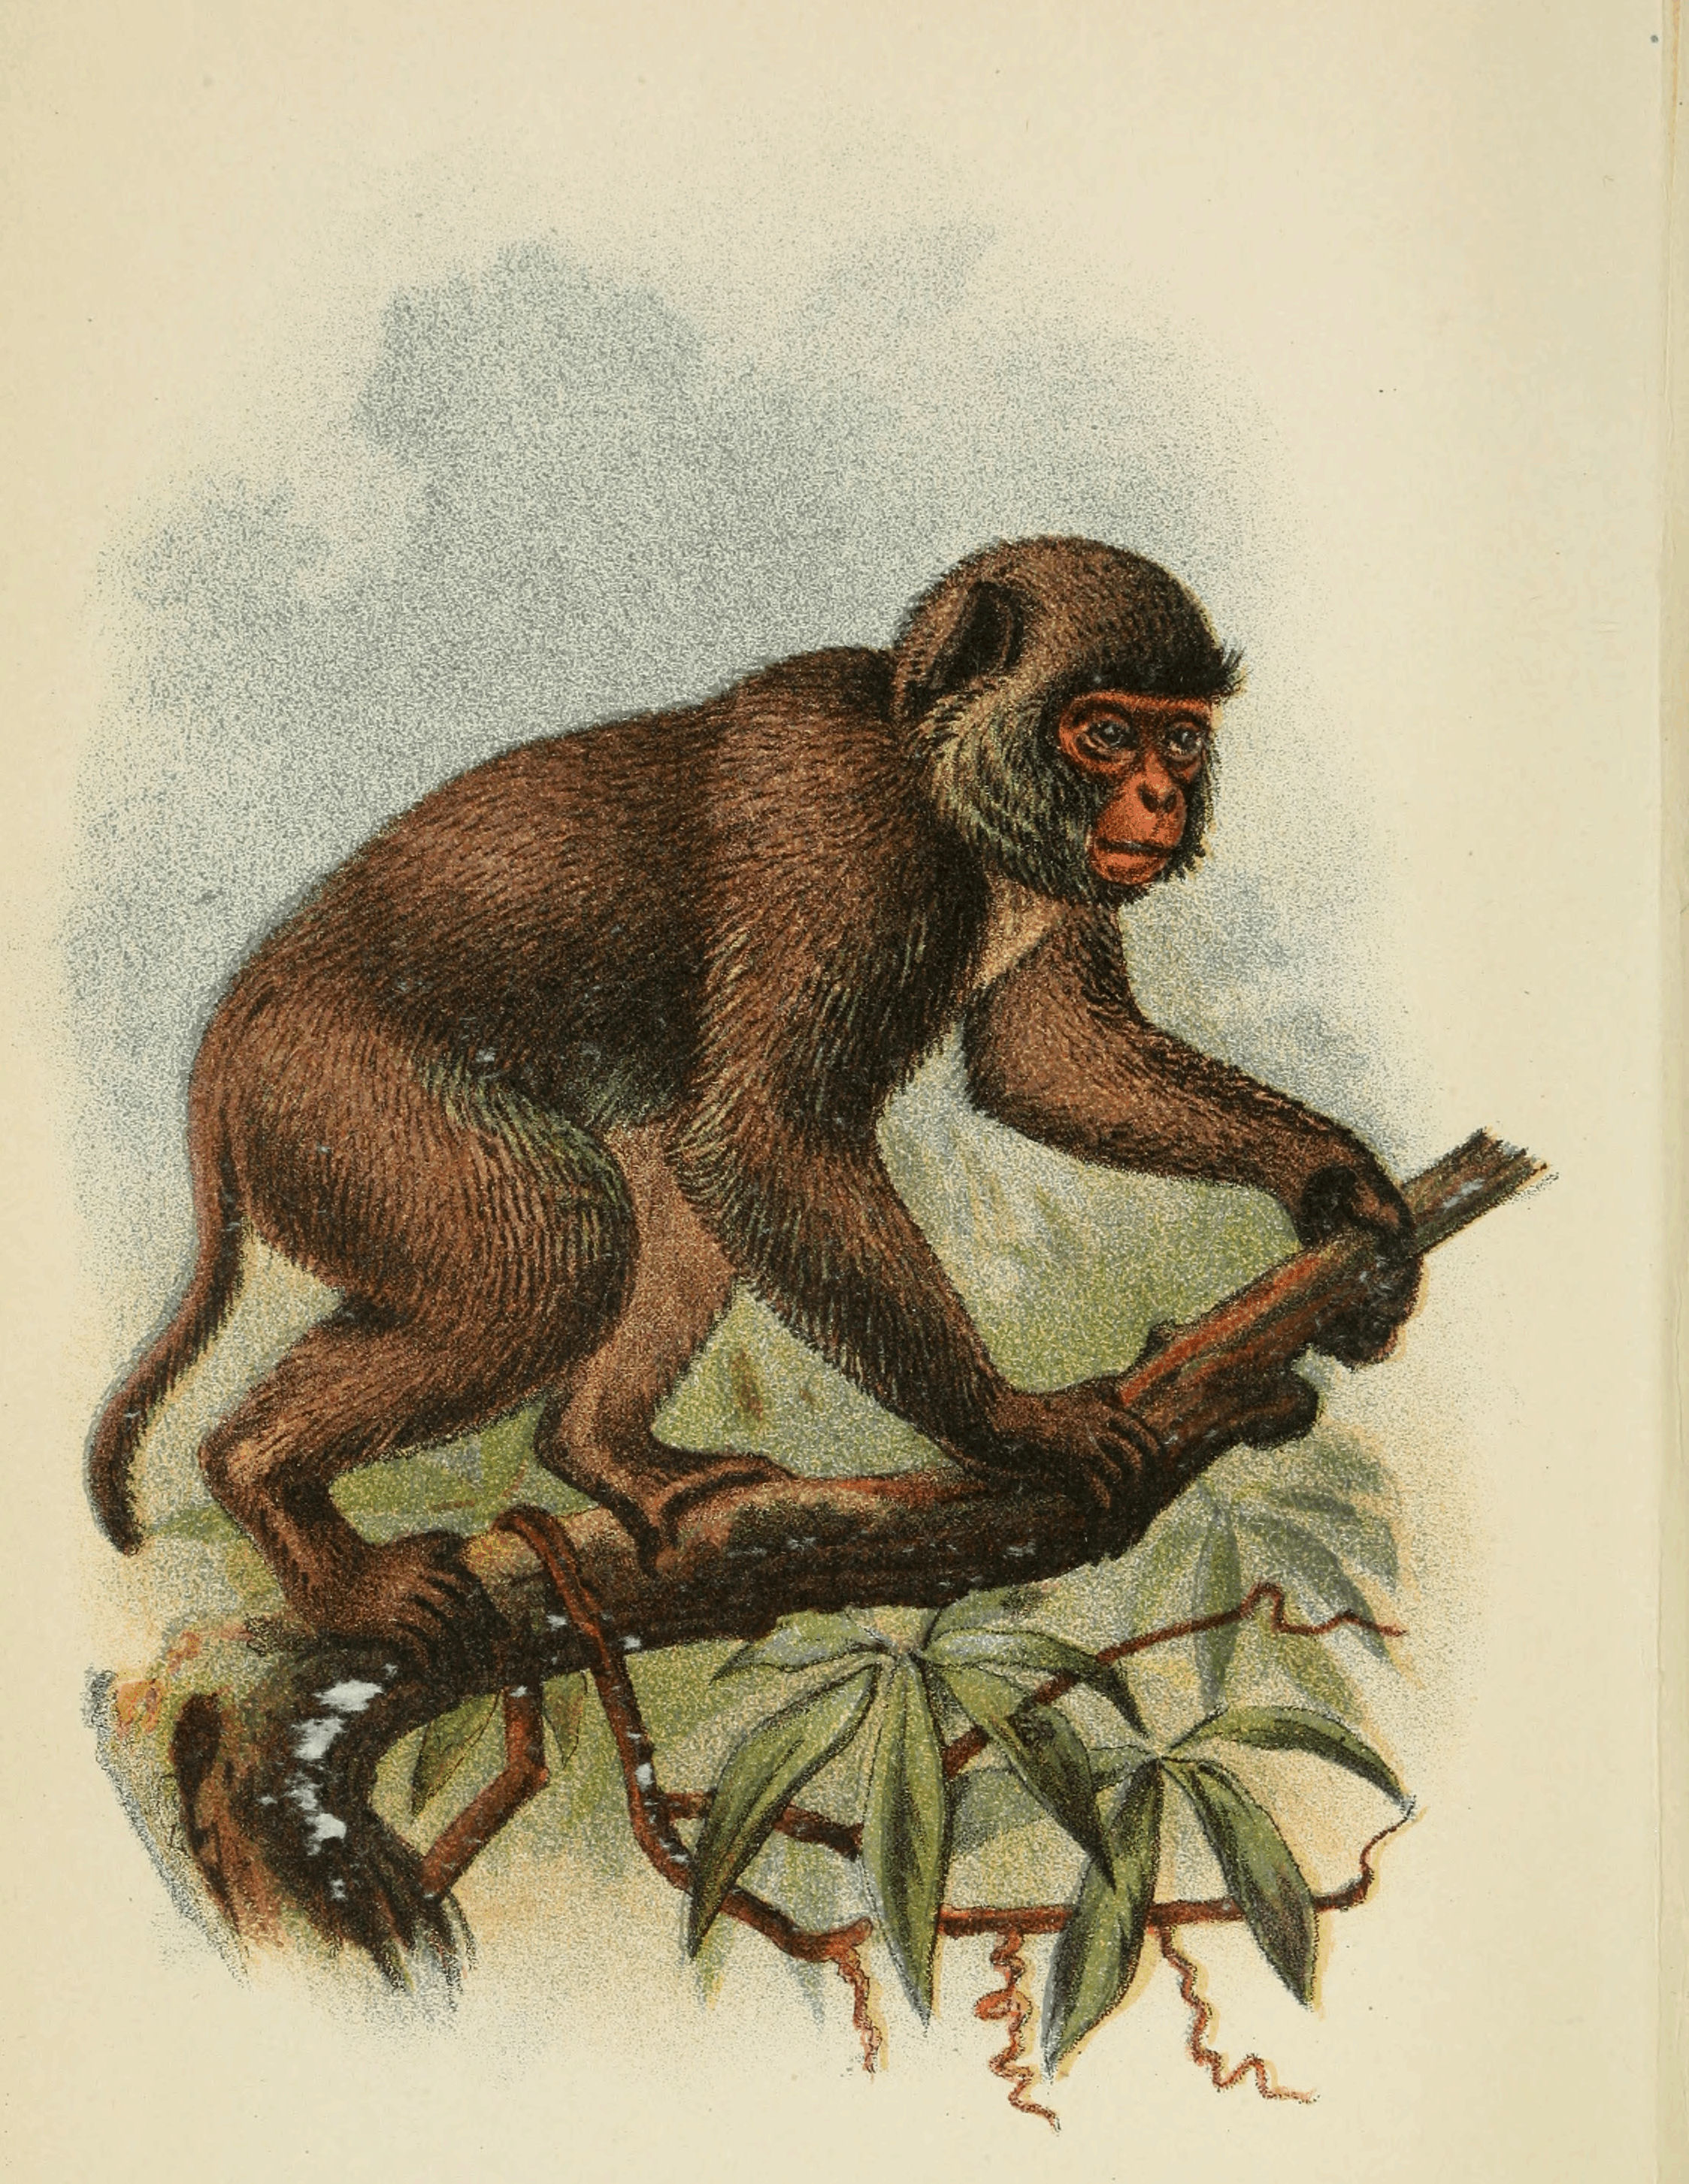 Profile of a wild monkey in the jungle. Primate Macaco Prego (nail